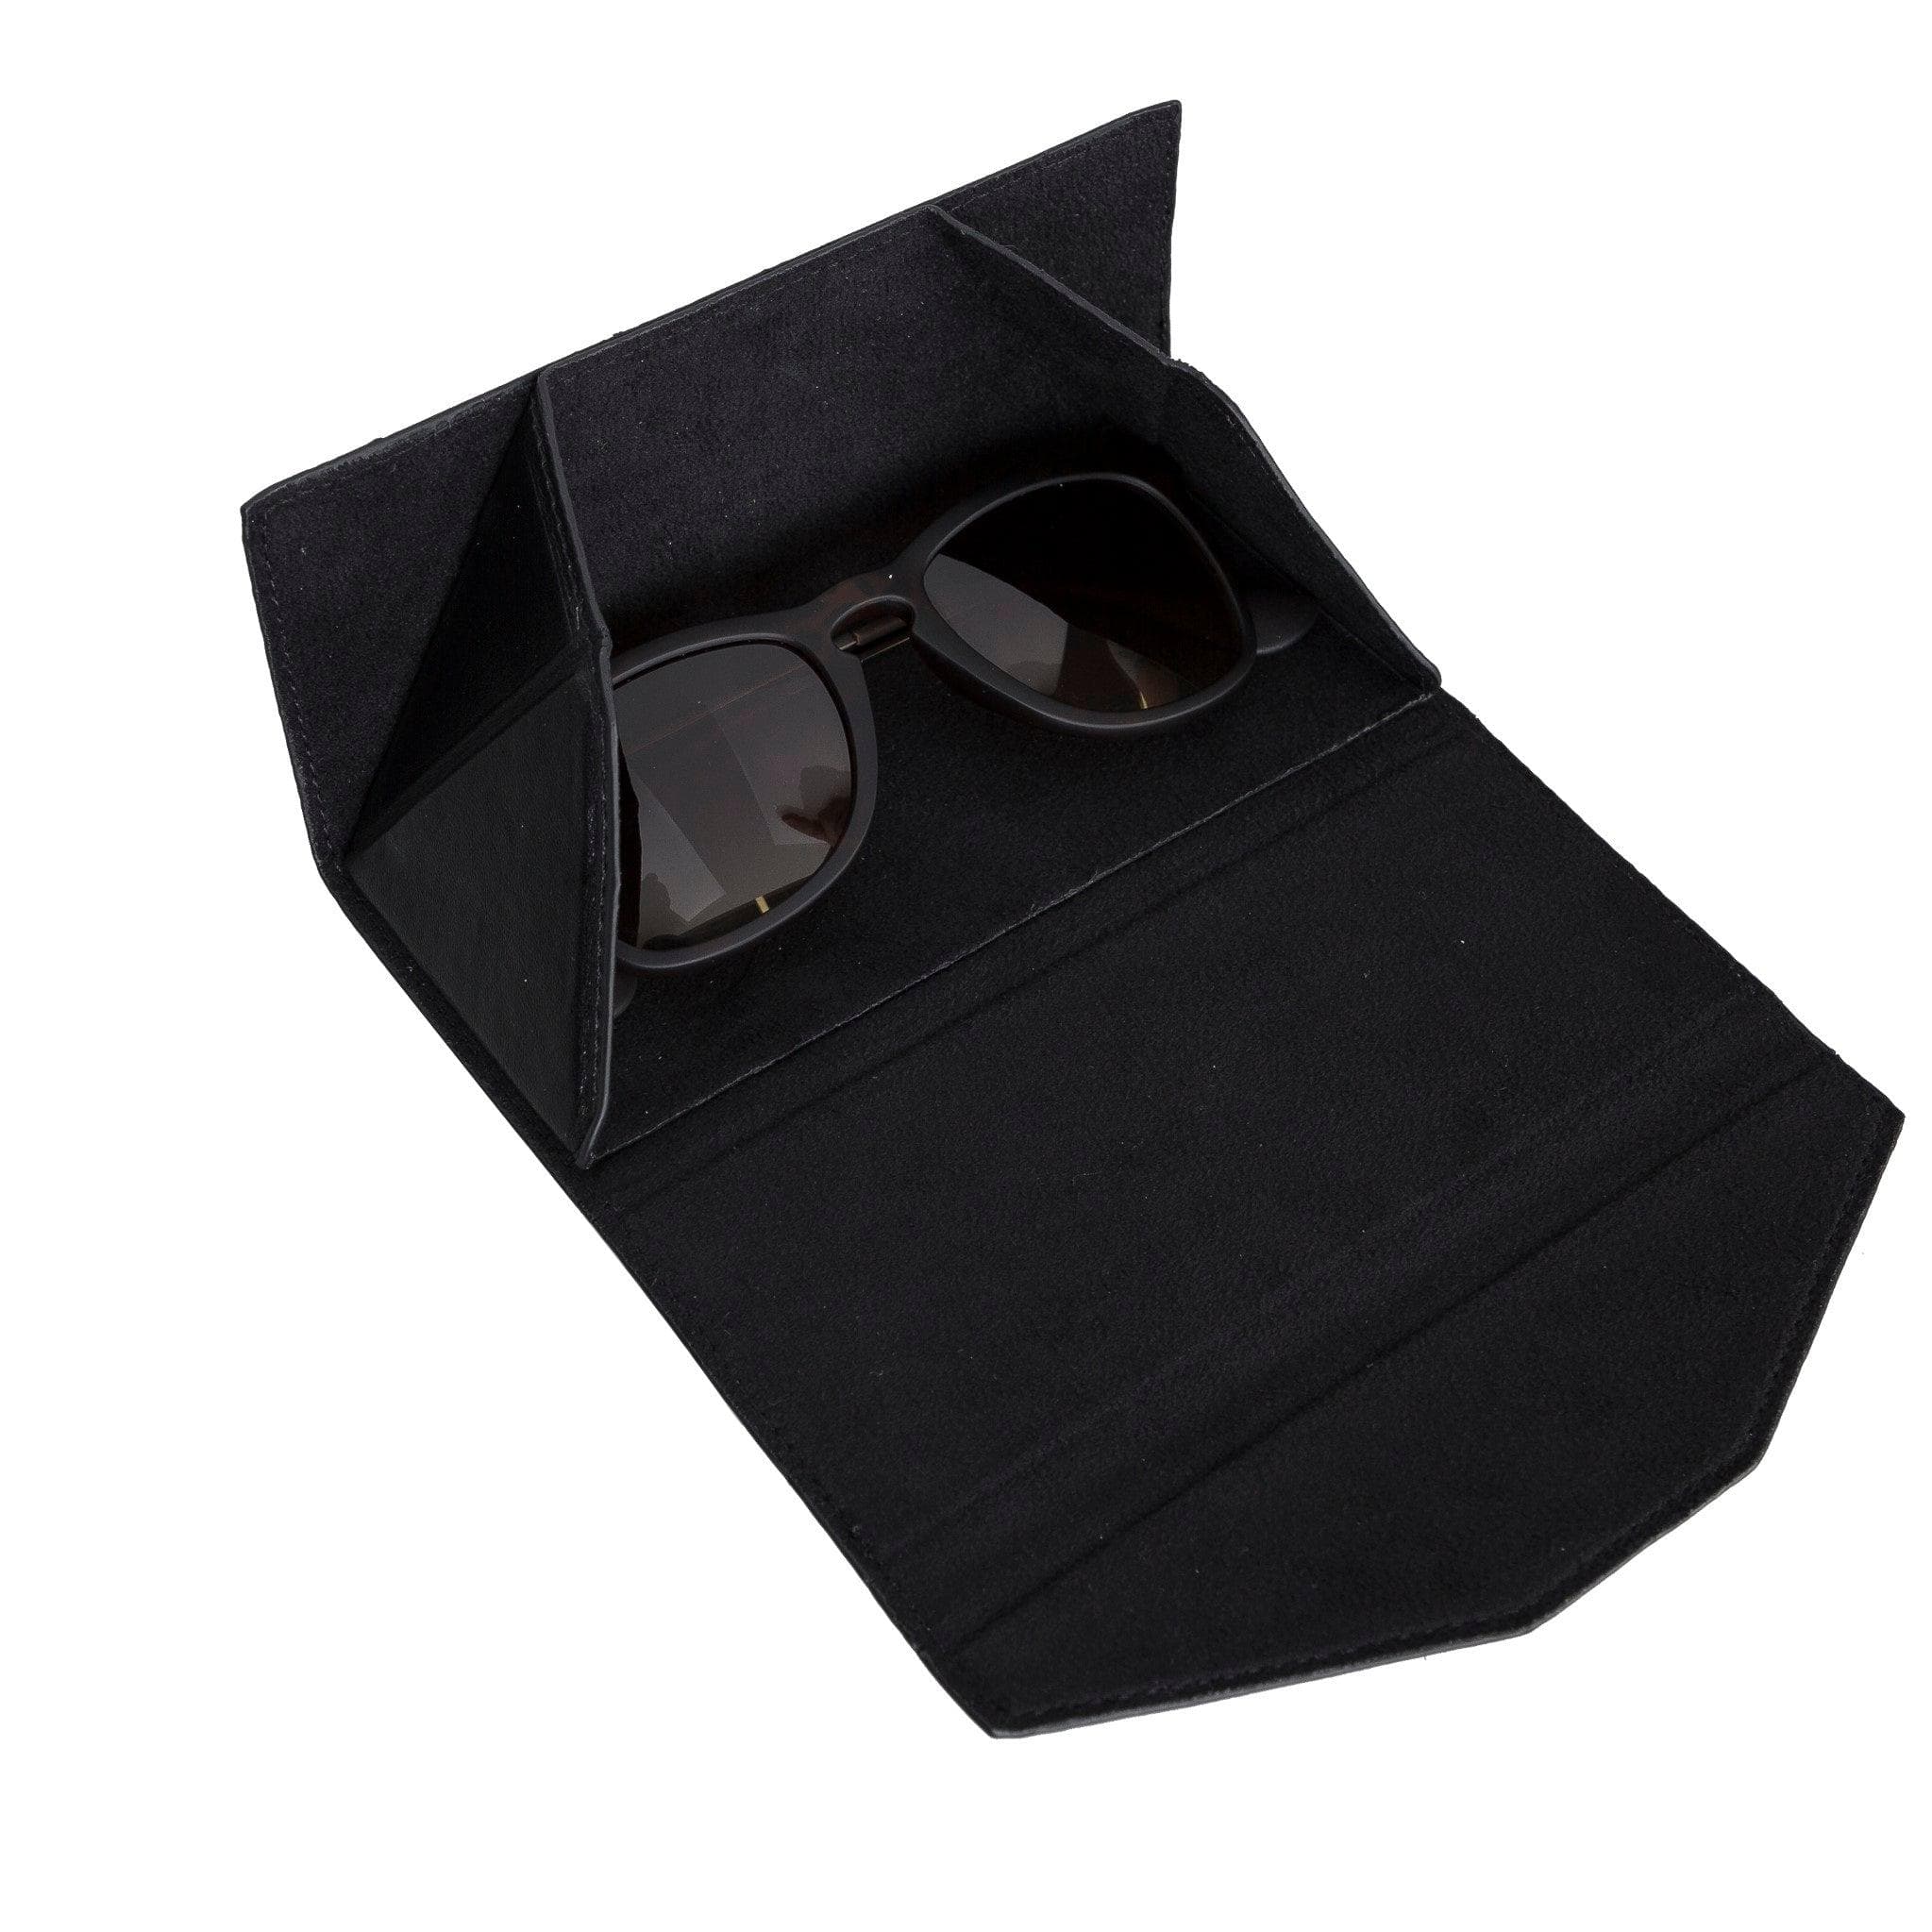 B2B -Smart Glasses Leather Case Bomonti